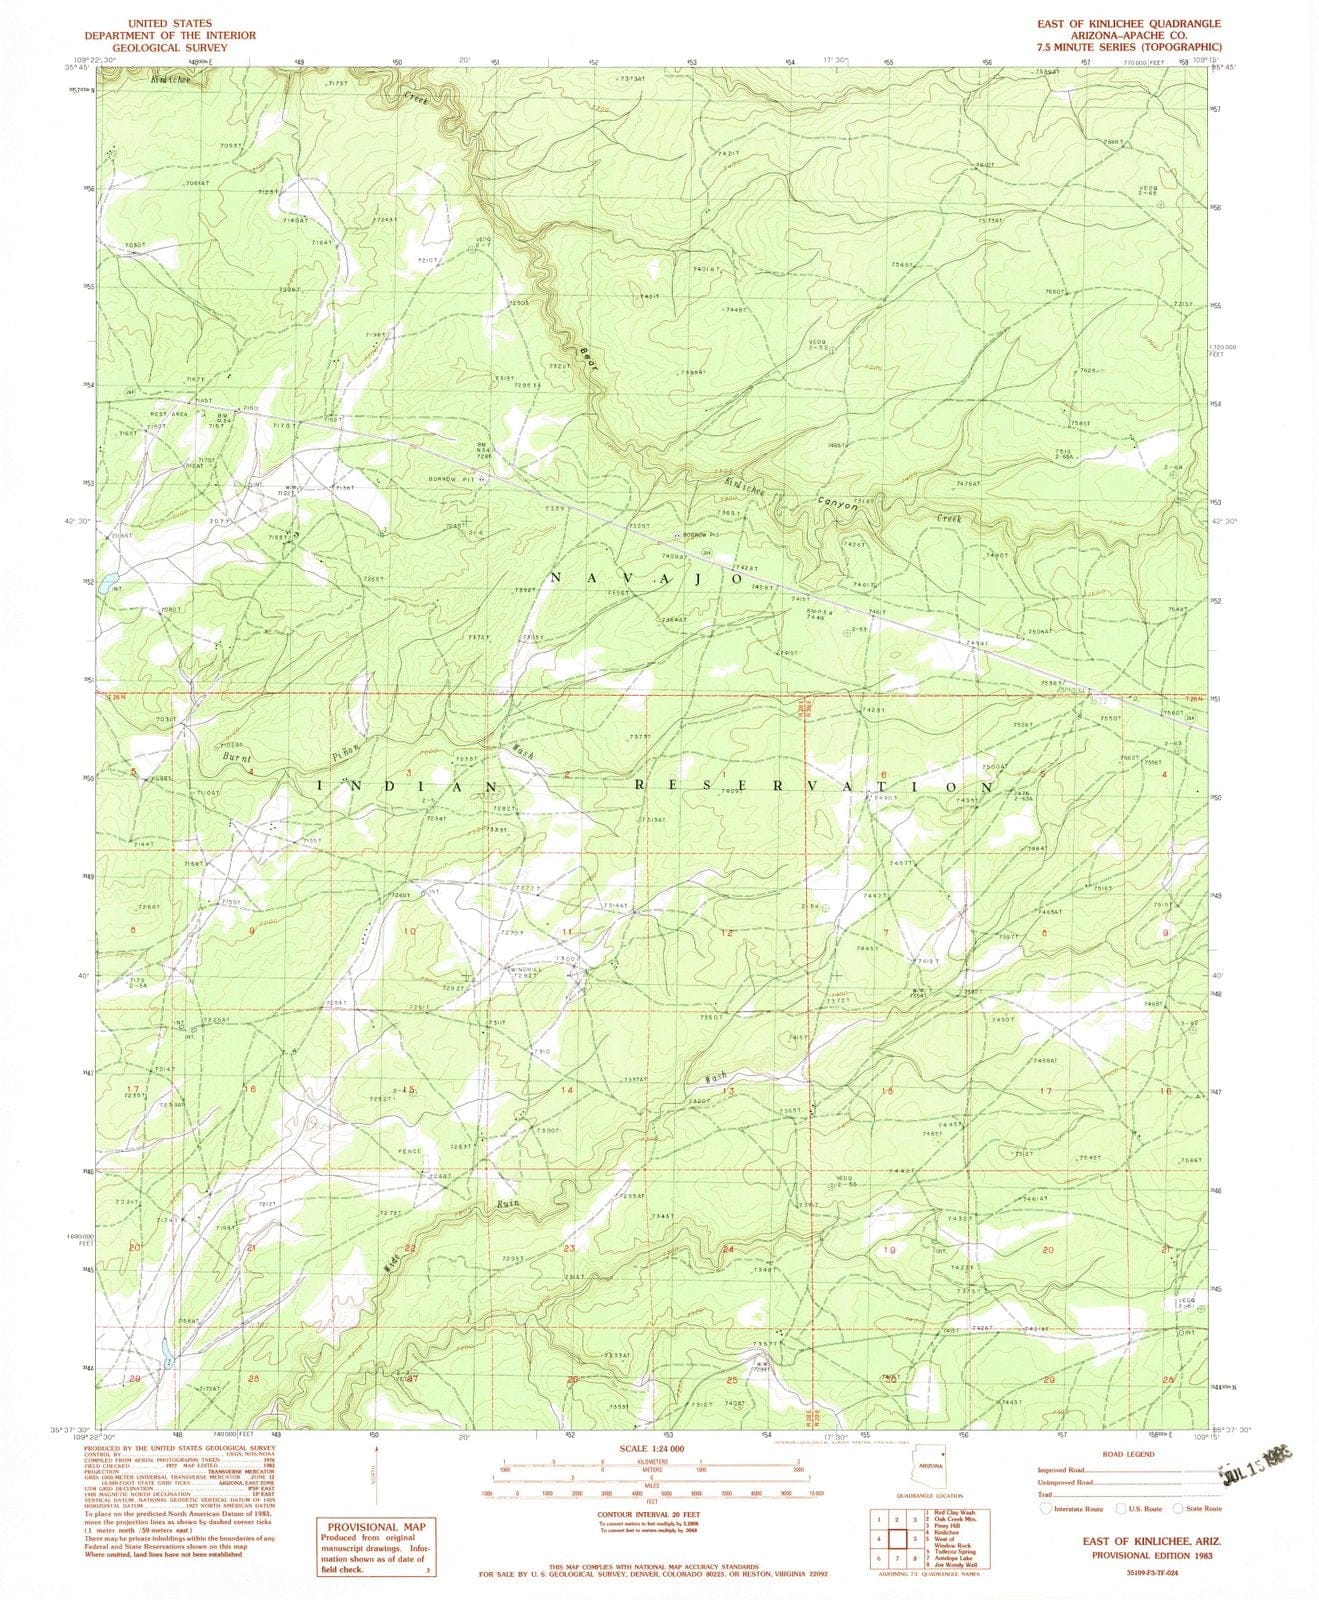 1983 East of Kinlichee, AZ - Arizona - USGS Topographic Map